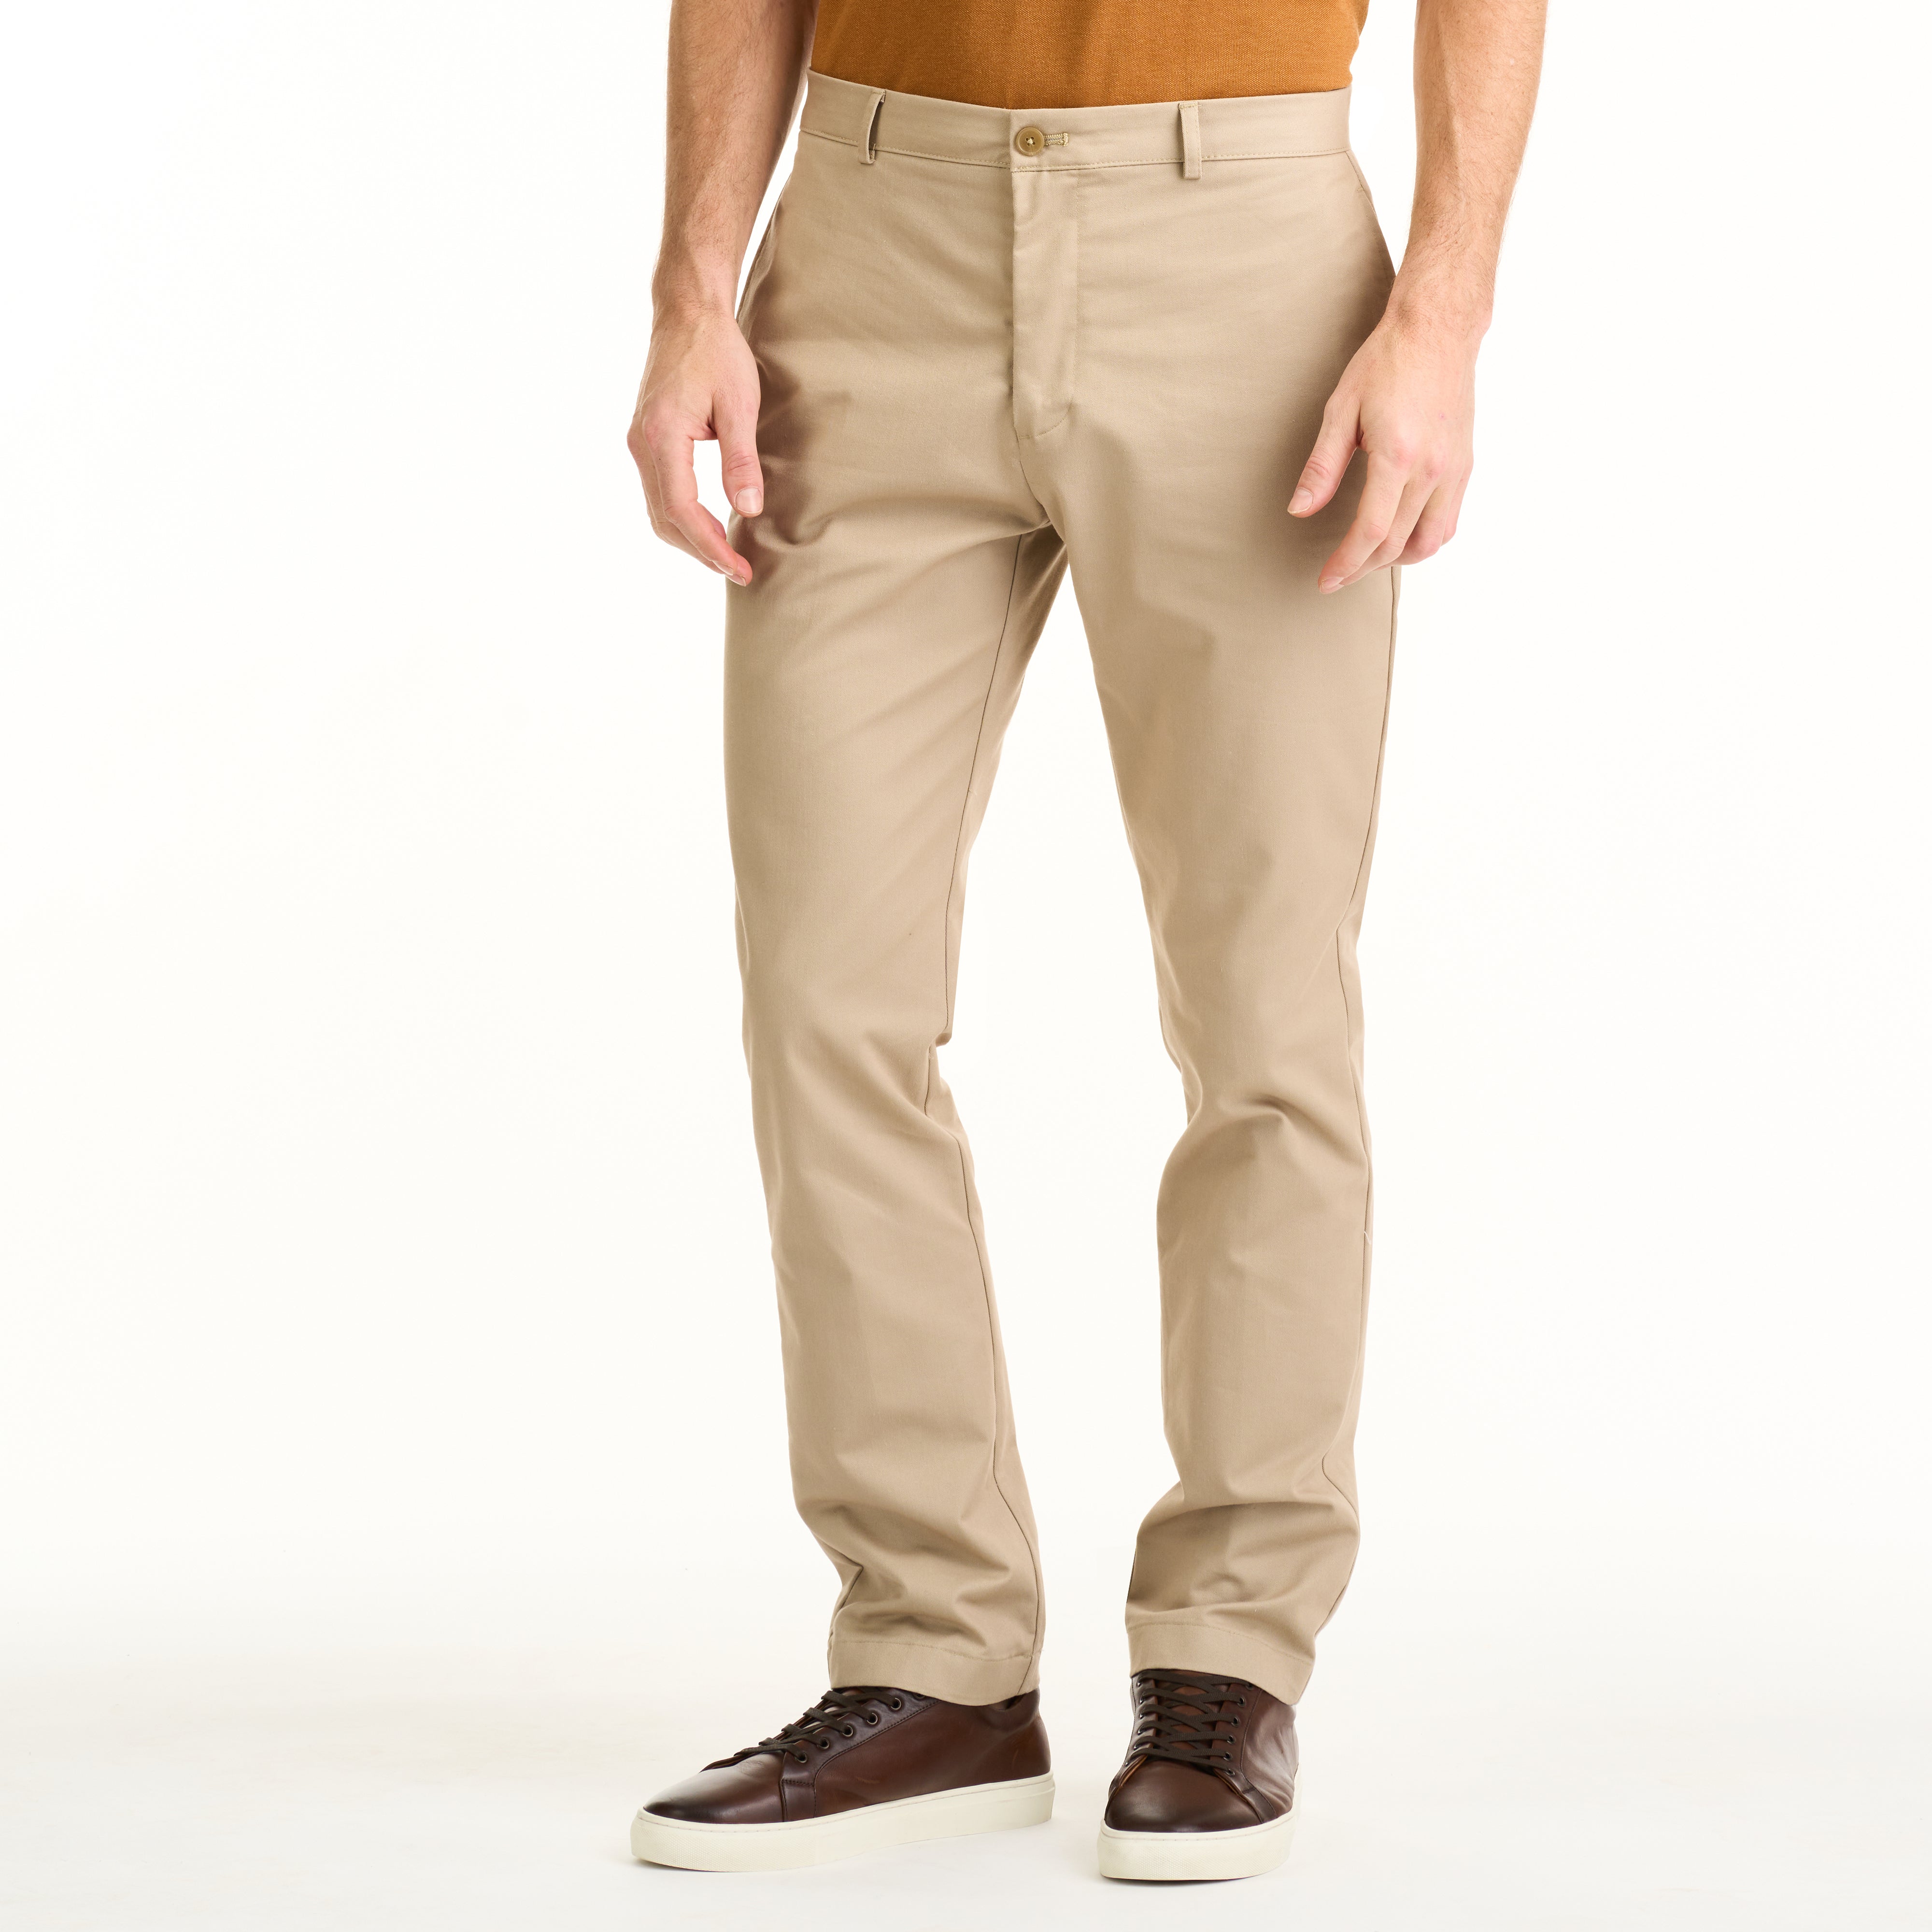 LL Bean Men's Khaki Wrinkle Free Chino Pants Flat Front 33 x 35.5 NWT | eBay